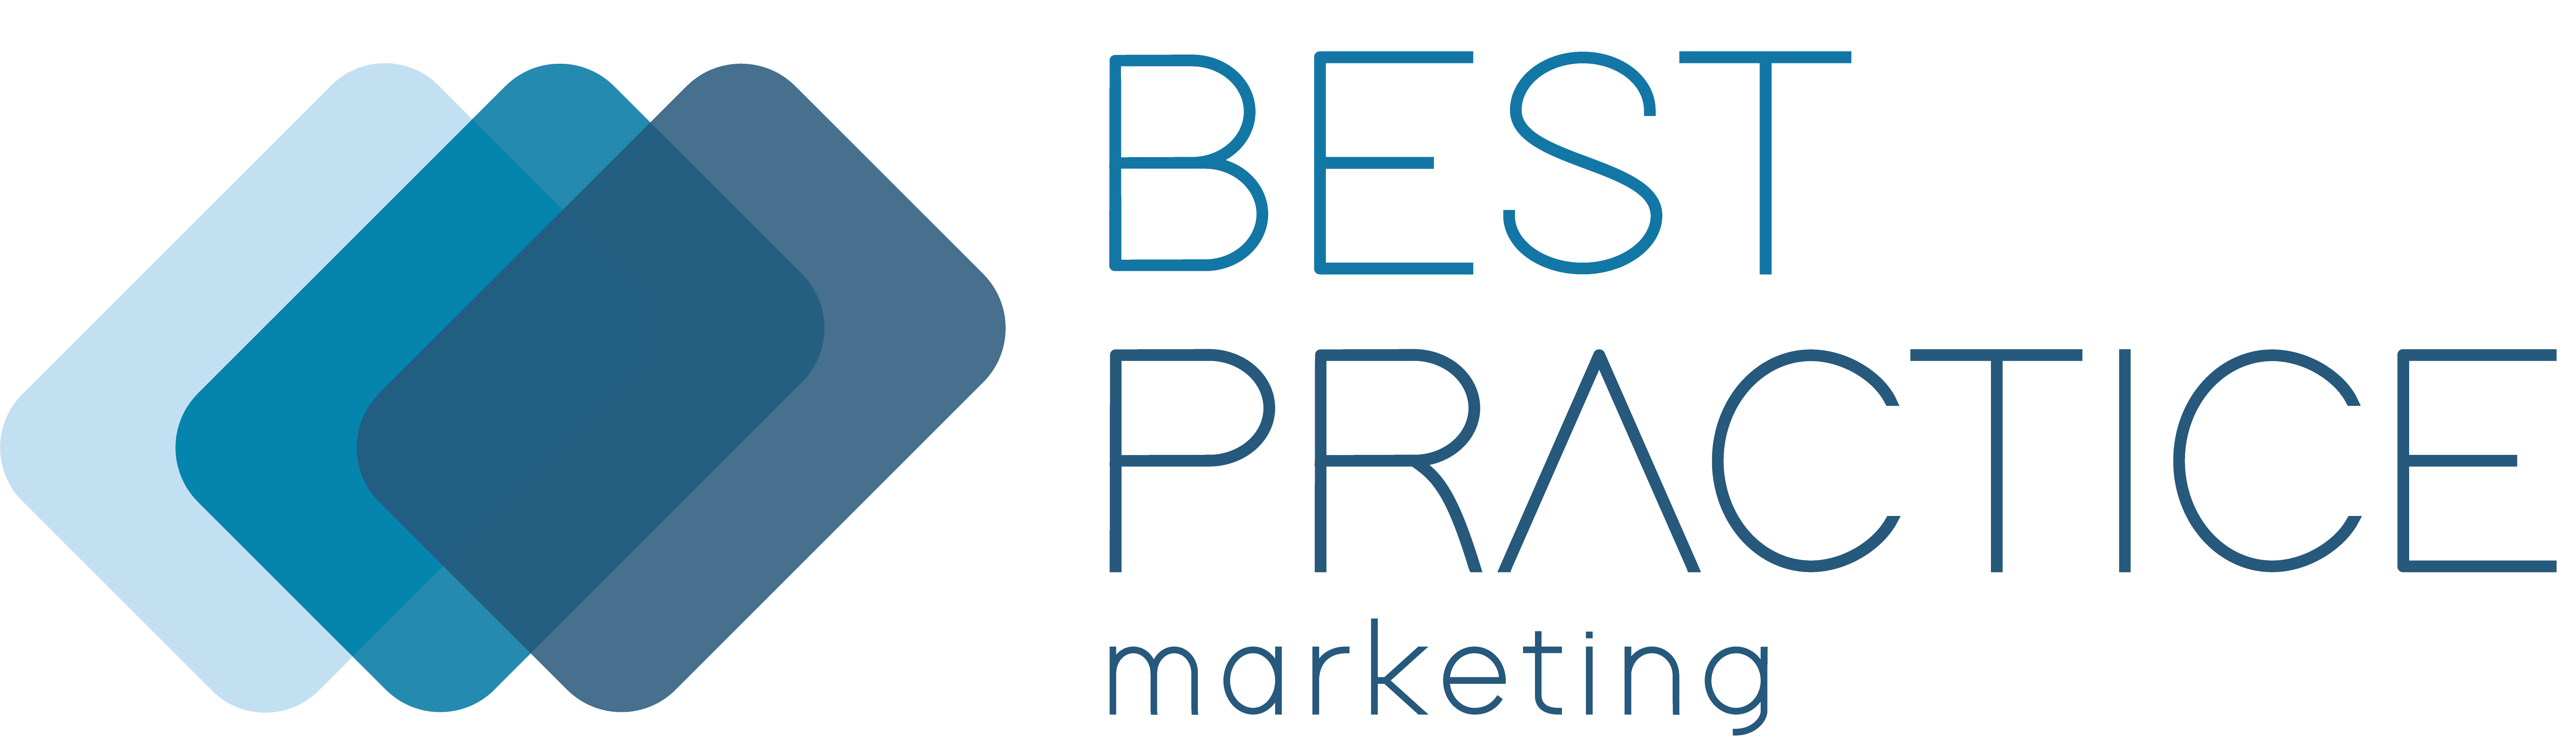 best practice marketing